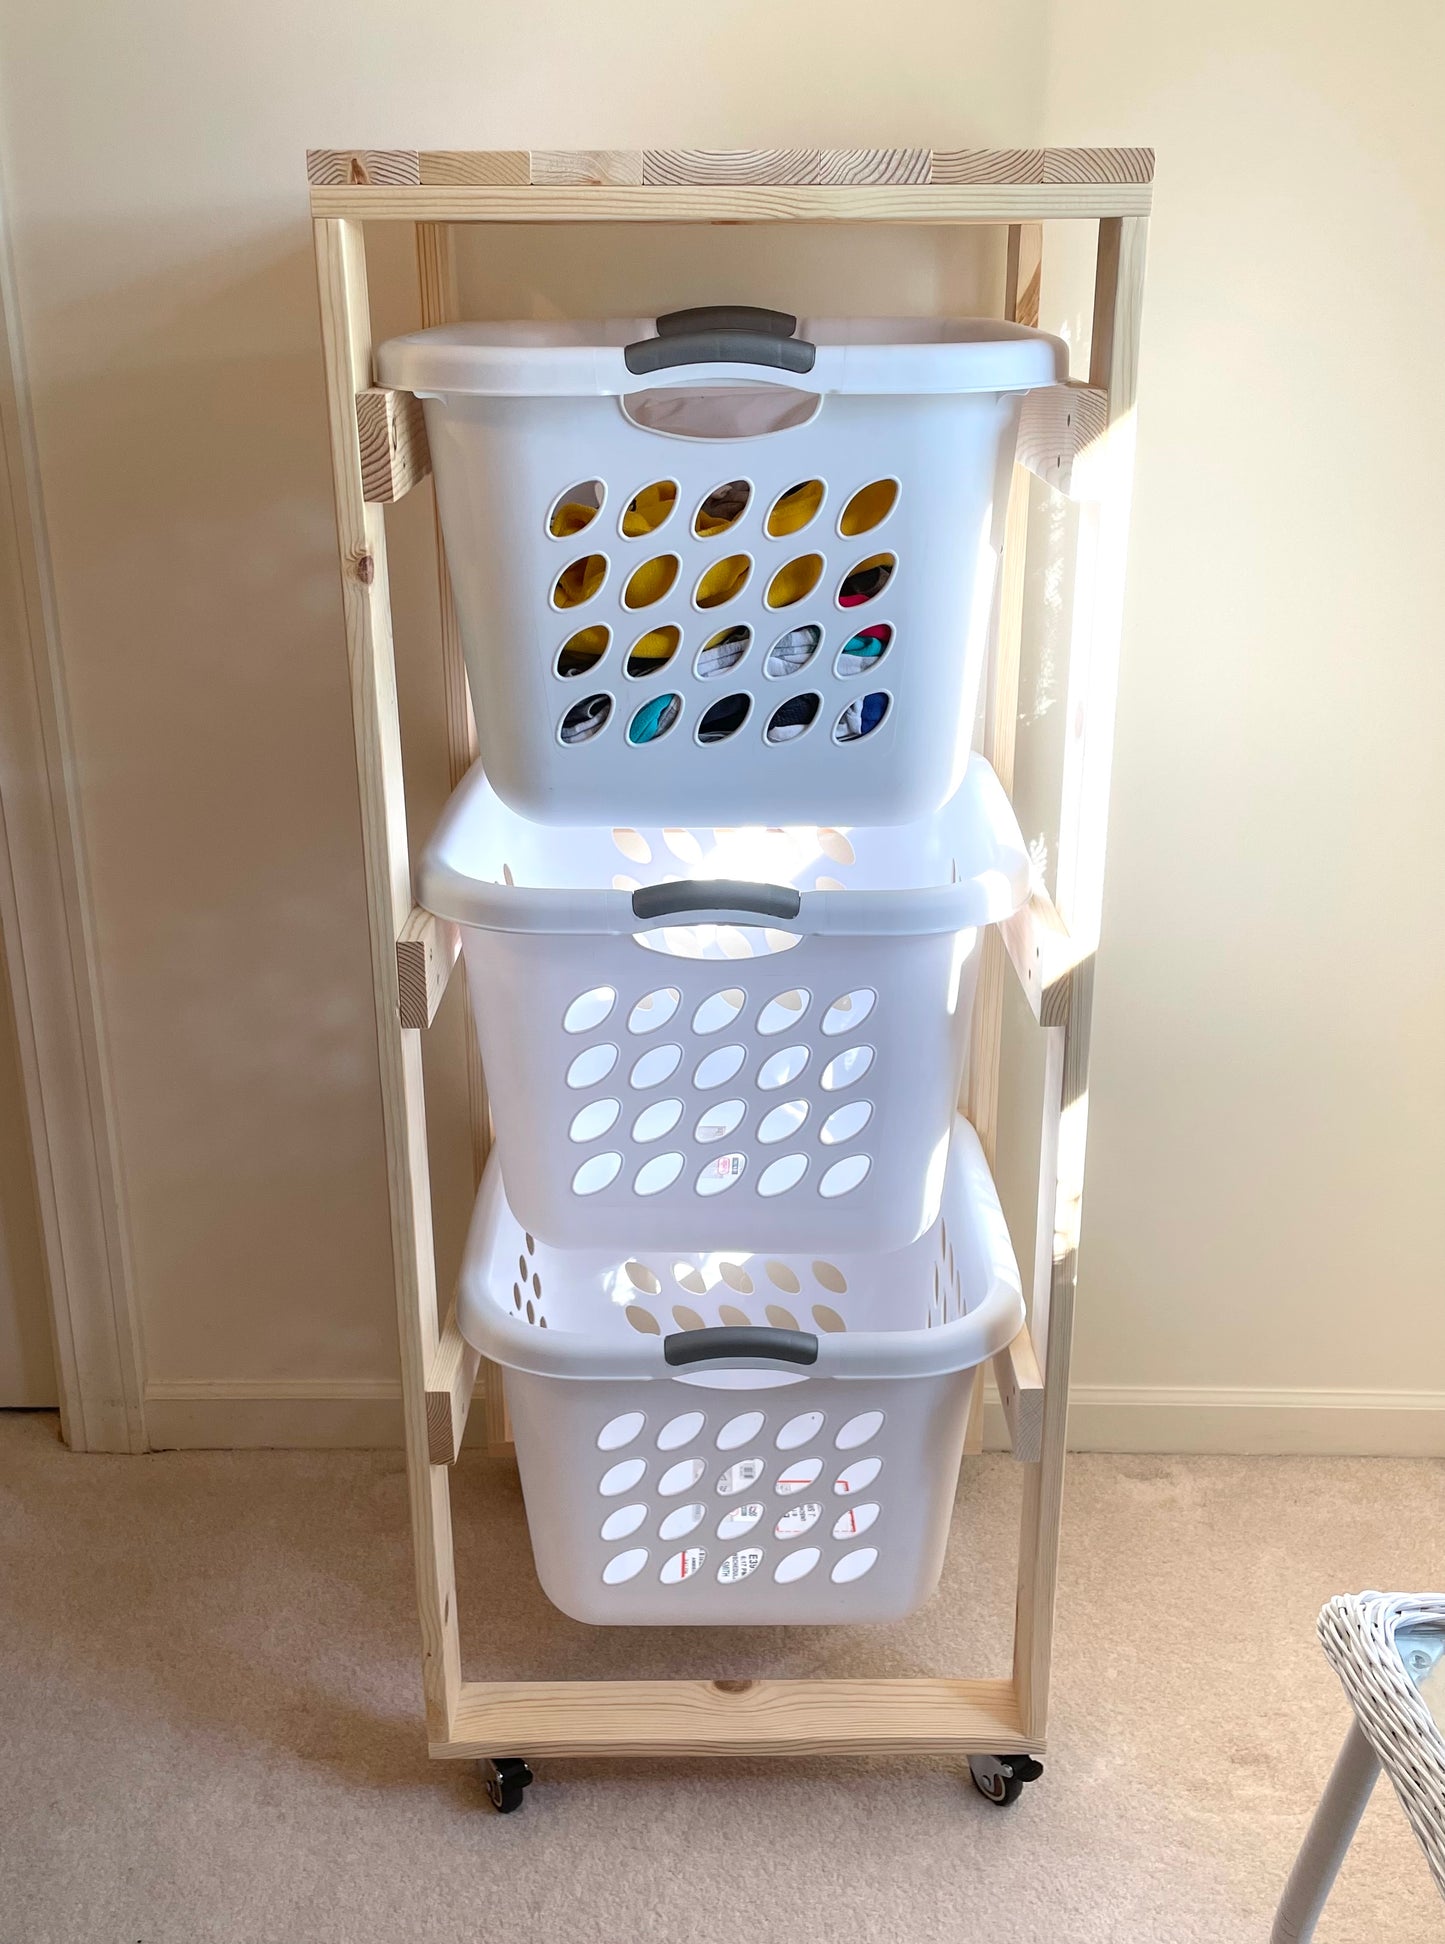 3 Tier Laundry Basket Holder (1.5 Bushel)